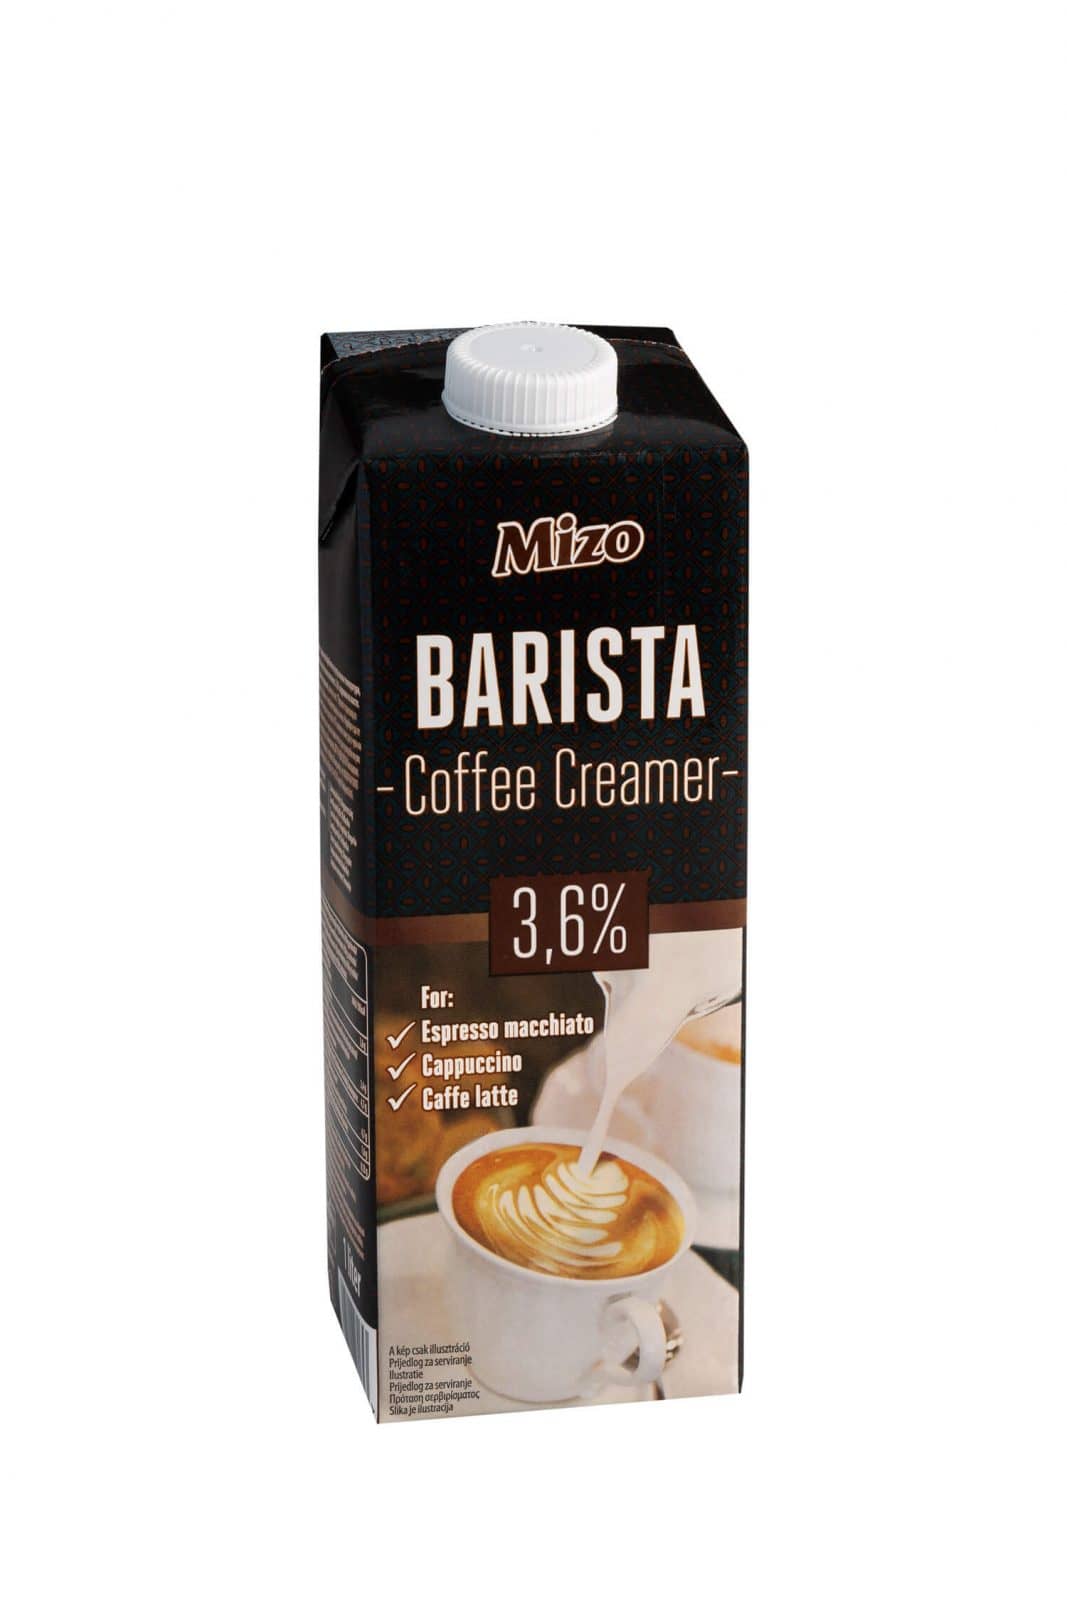 KT FOOD Mizo barista coffee creamer 3.6